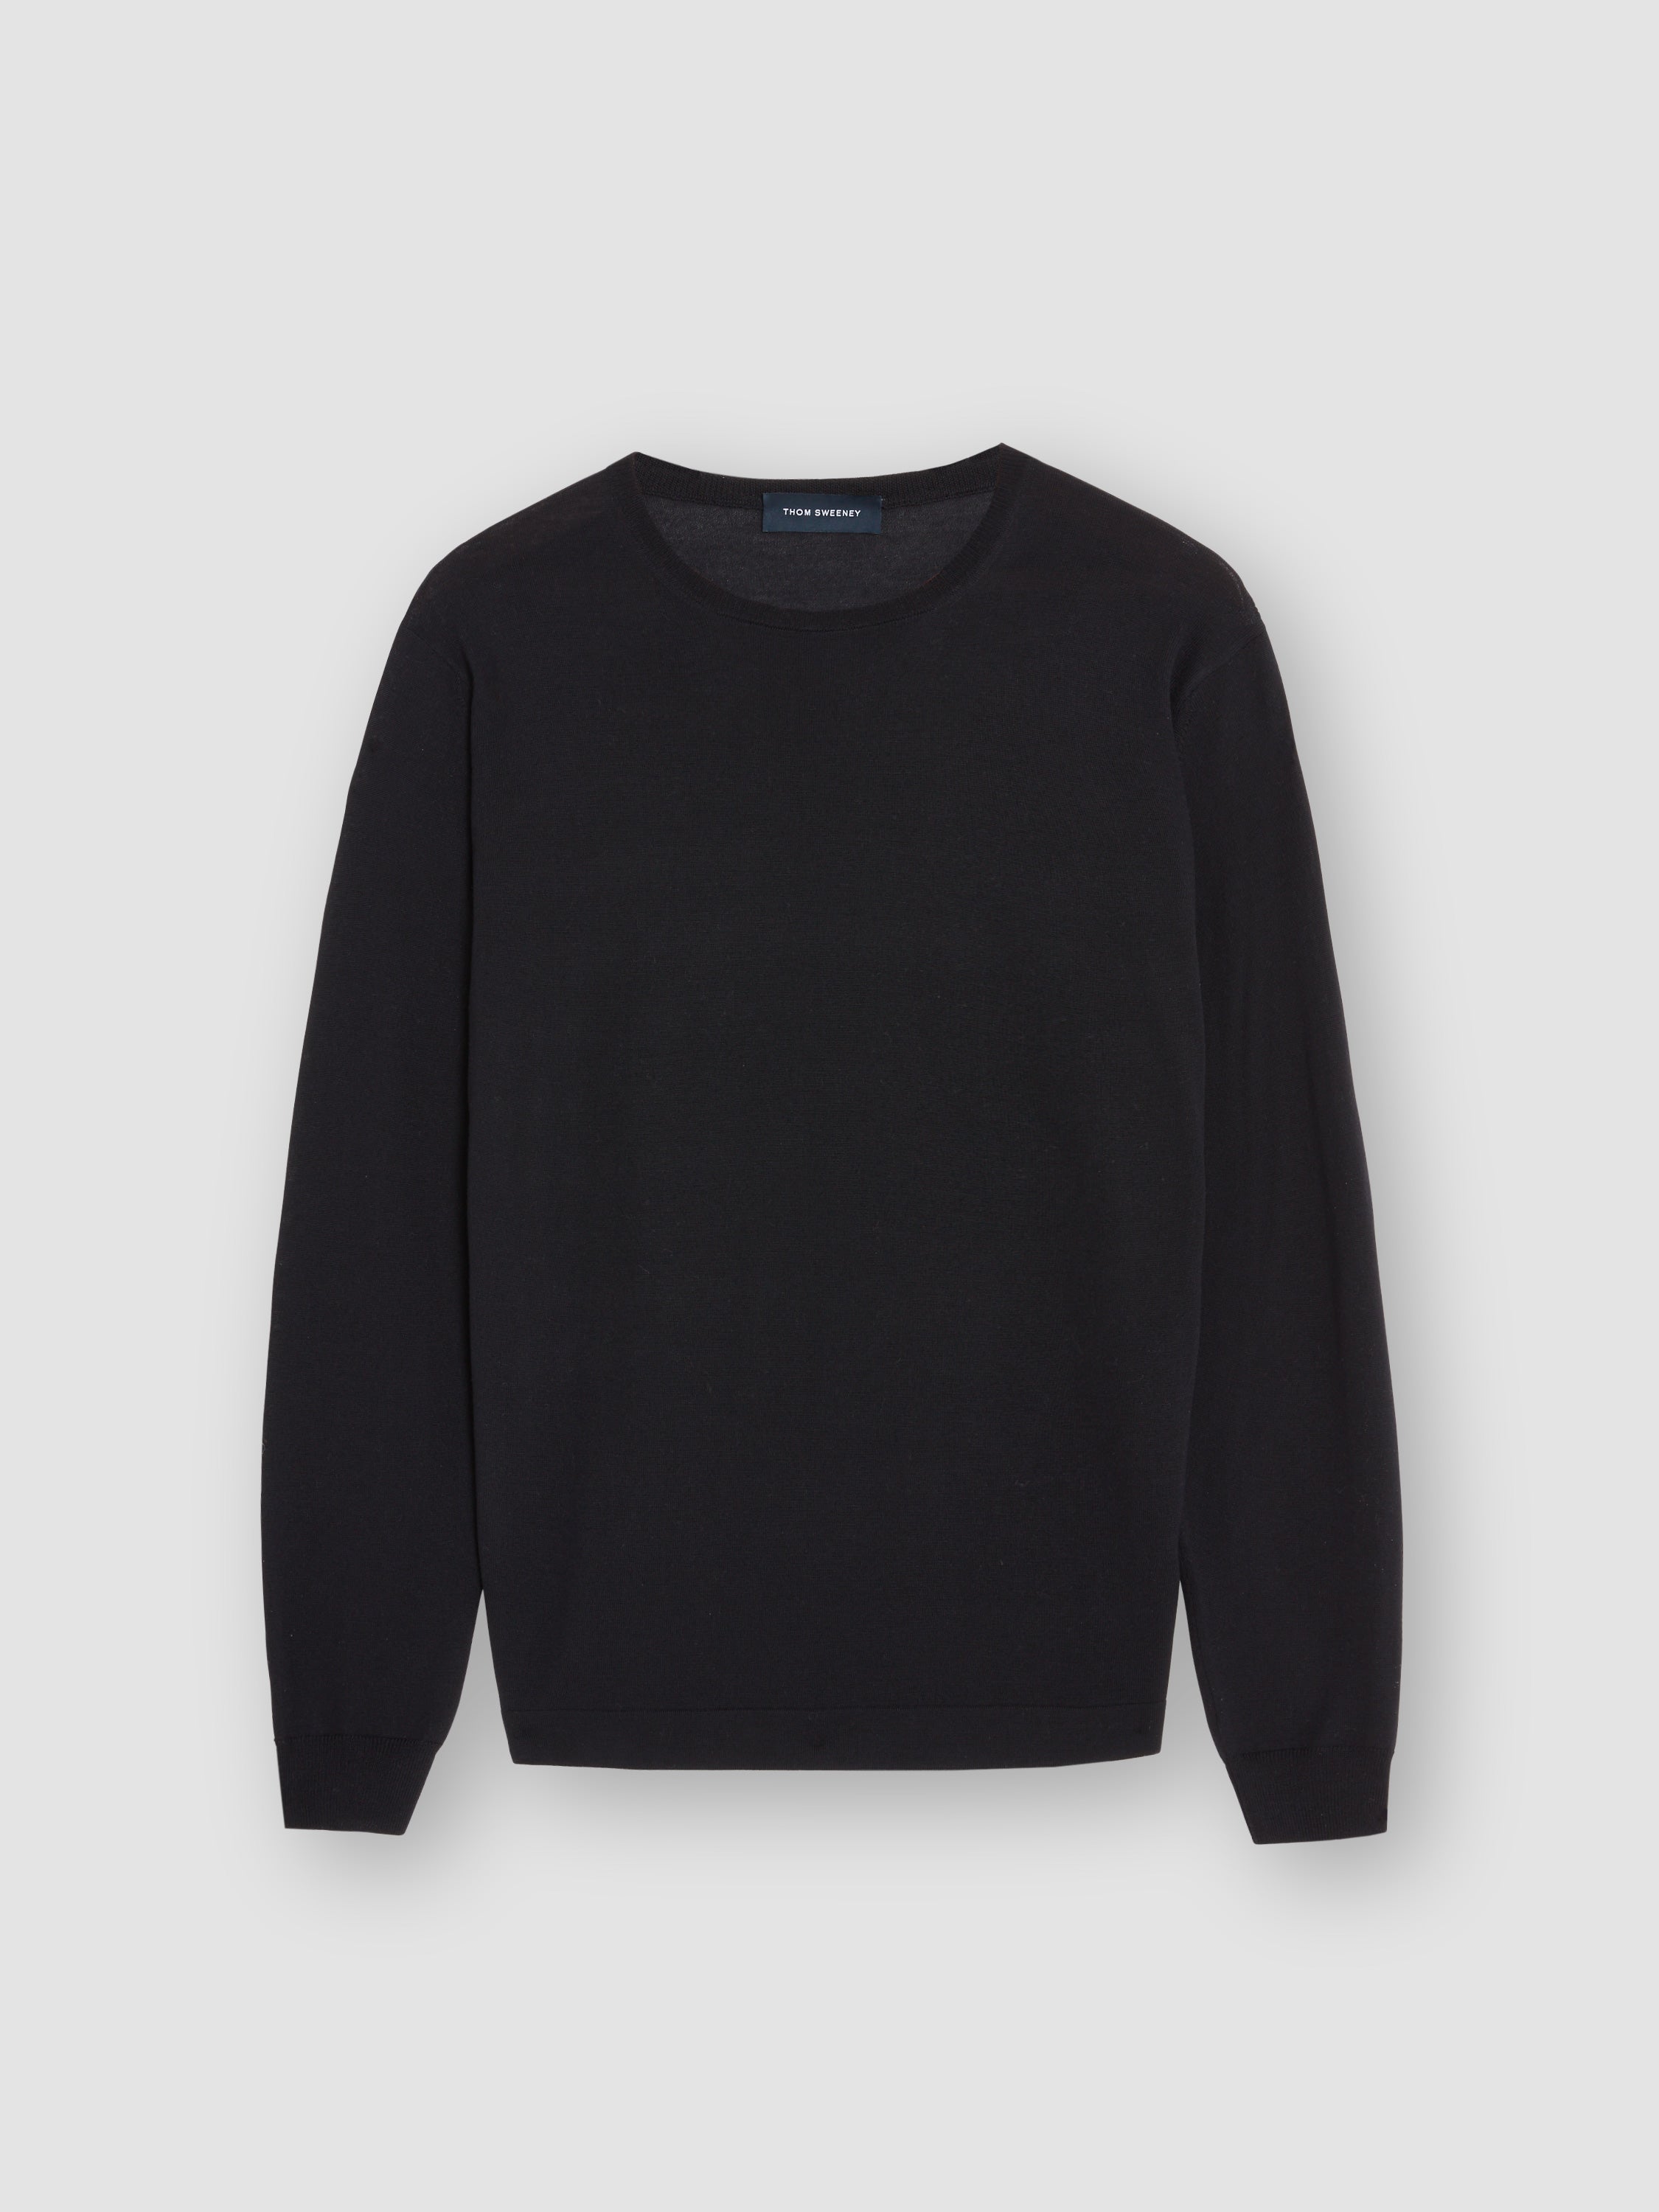 Merino Wool Extrafine Crew Neck Sweater Navy Product Image